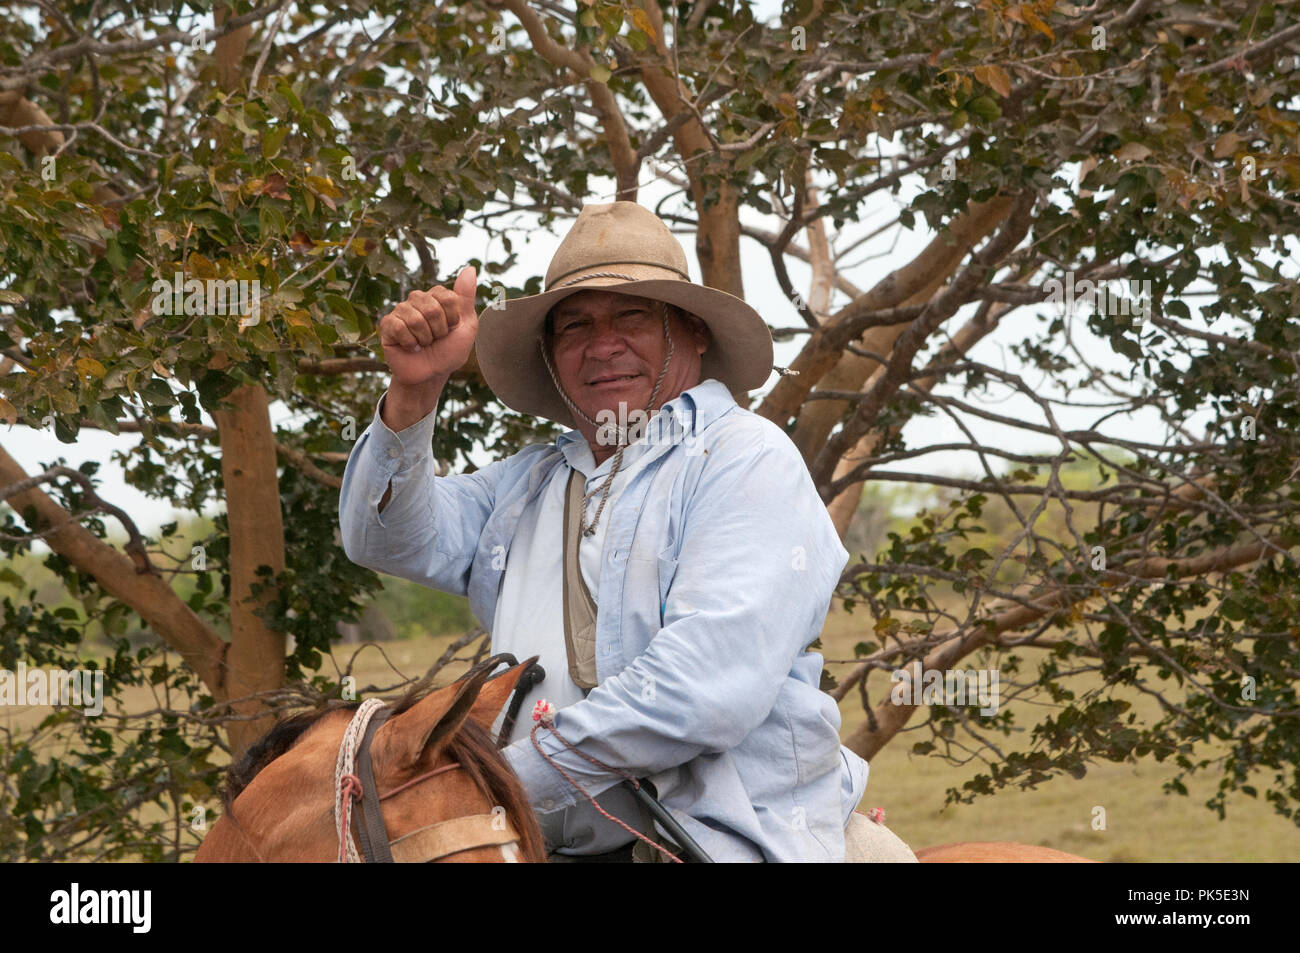 Columbian cowboy on horseback Stock Photo